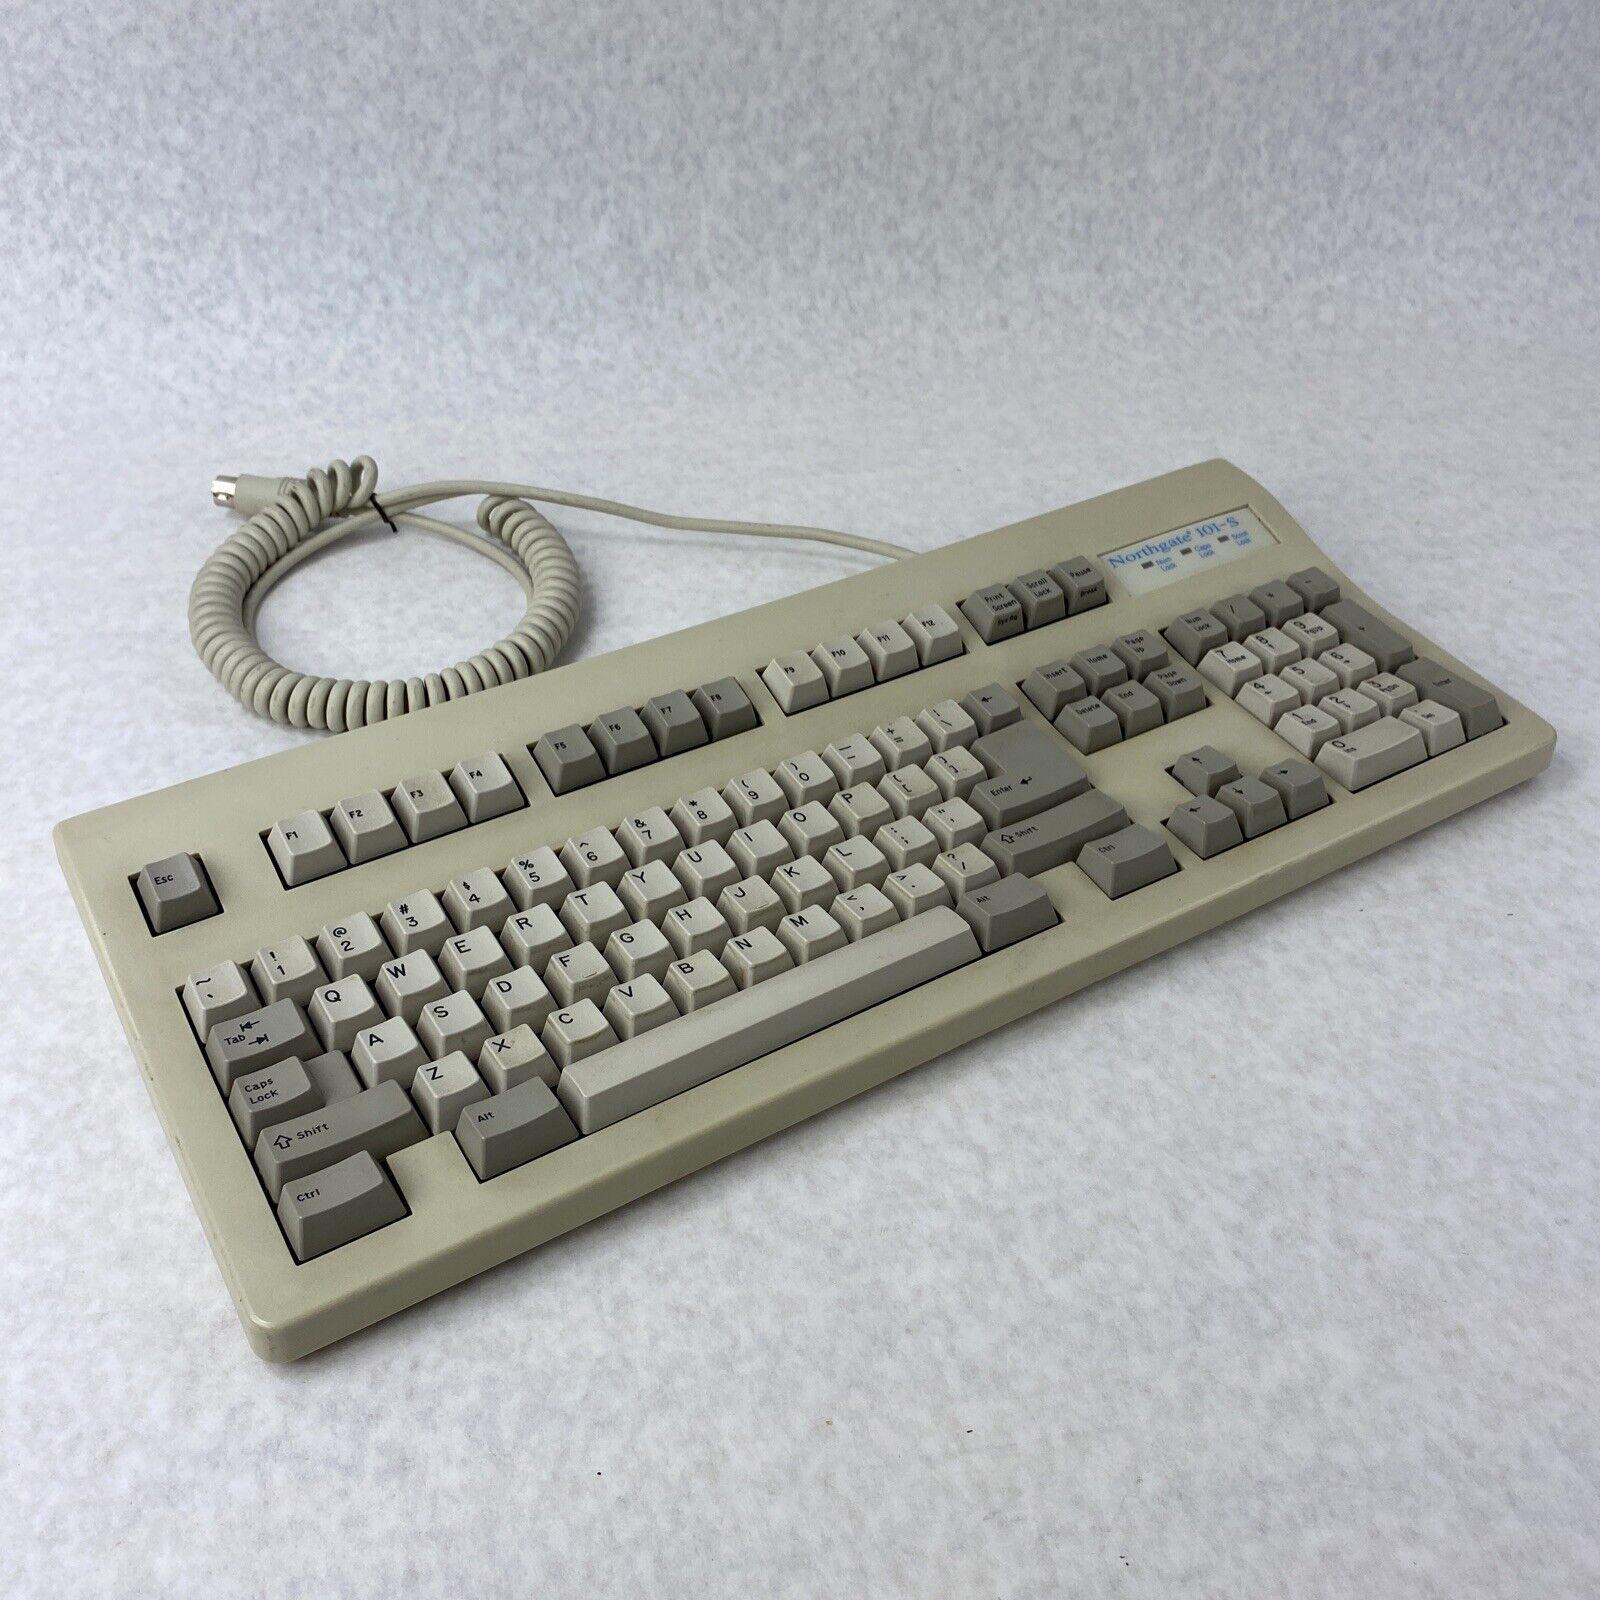 Northgate 101-S Vintage Keyboard White - Tested